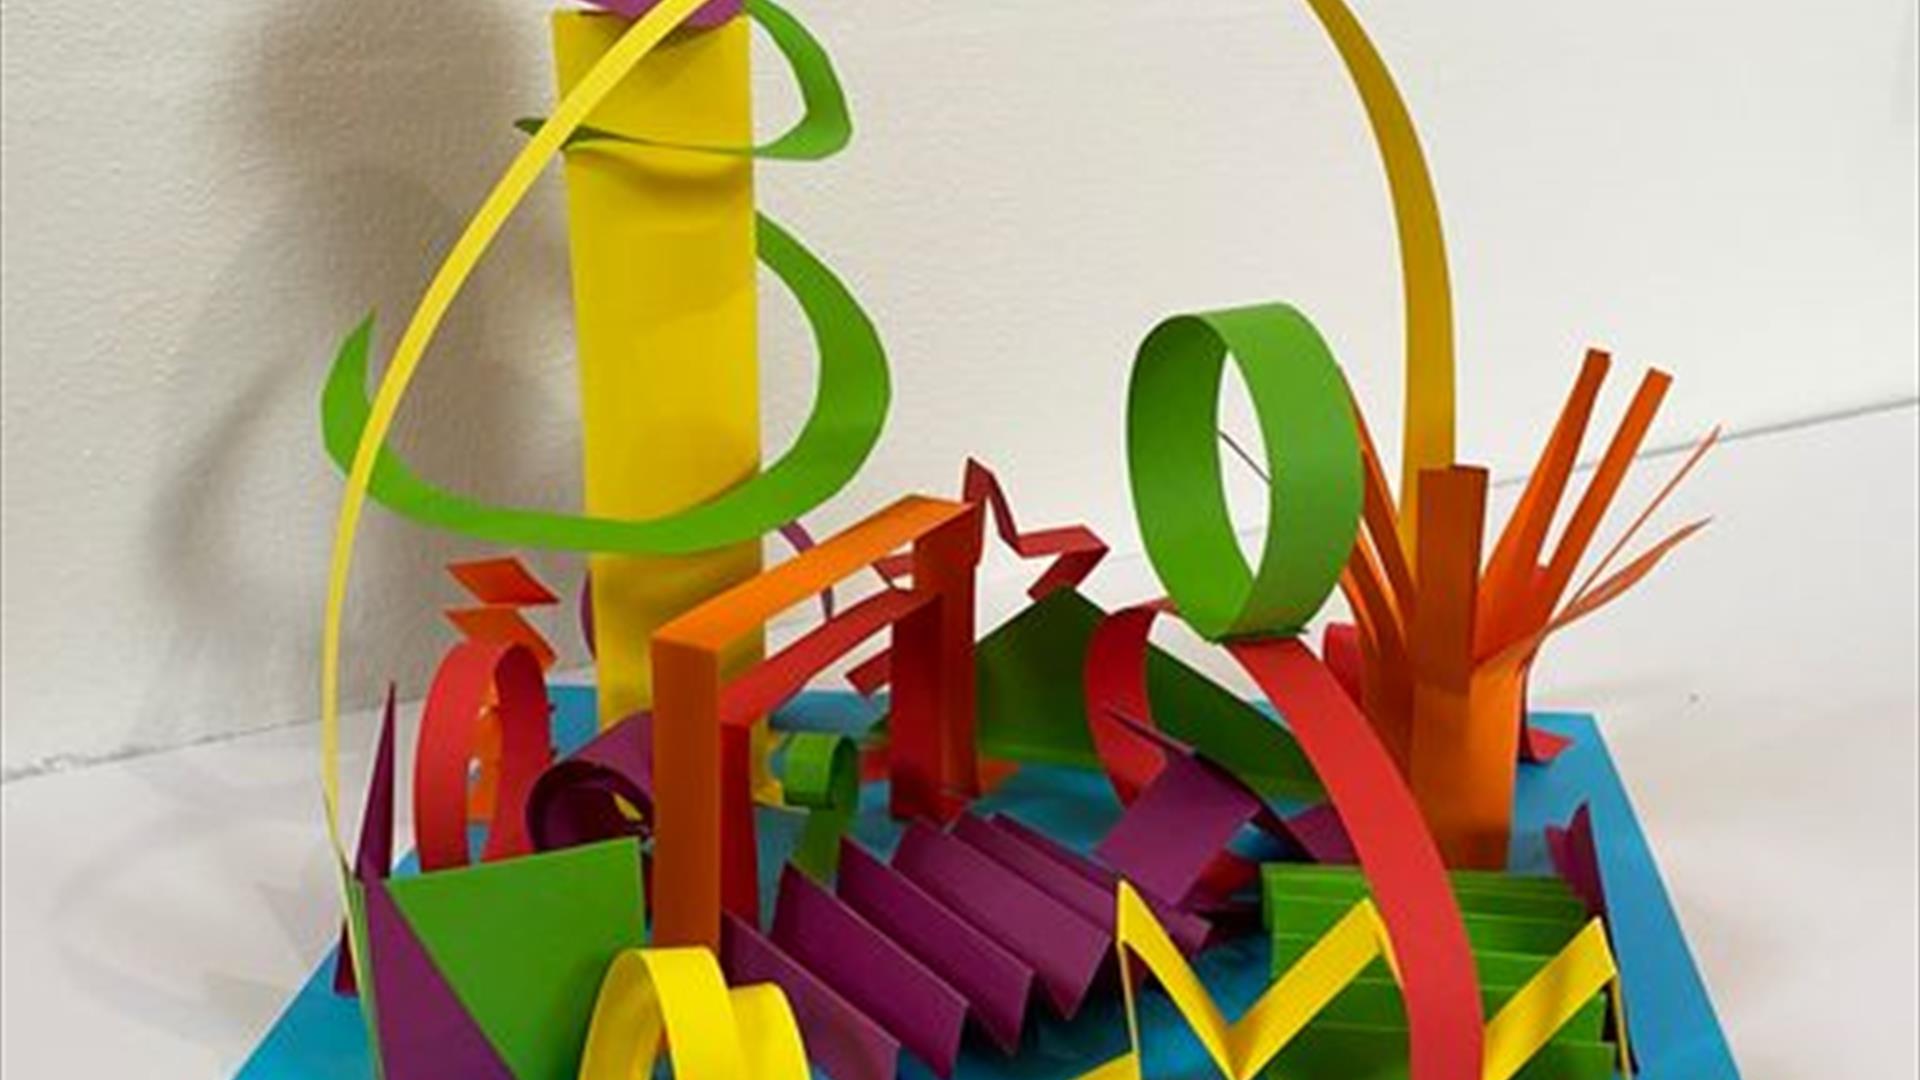 Colourful paper sculpture